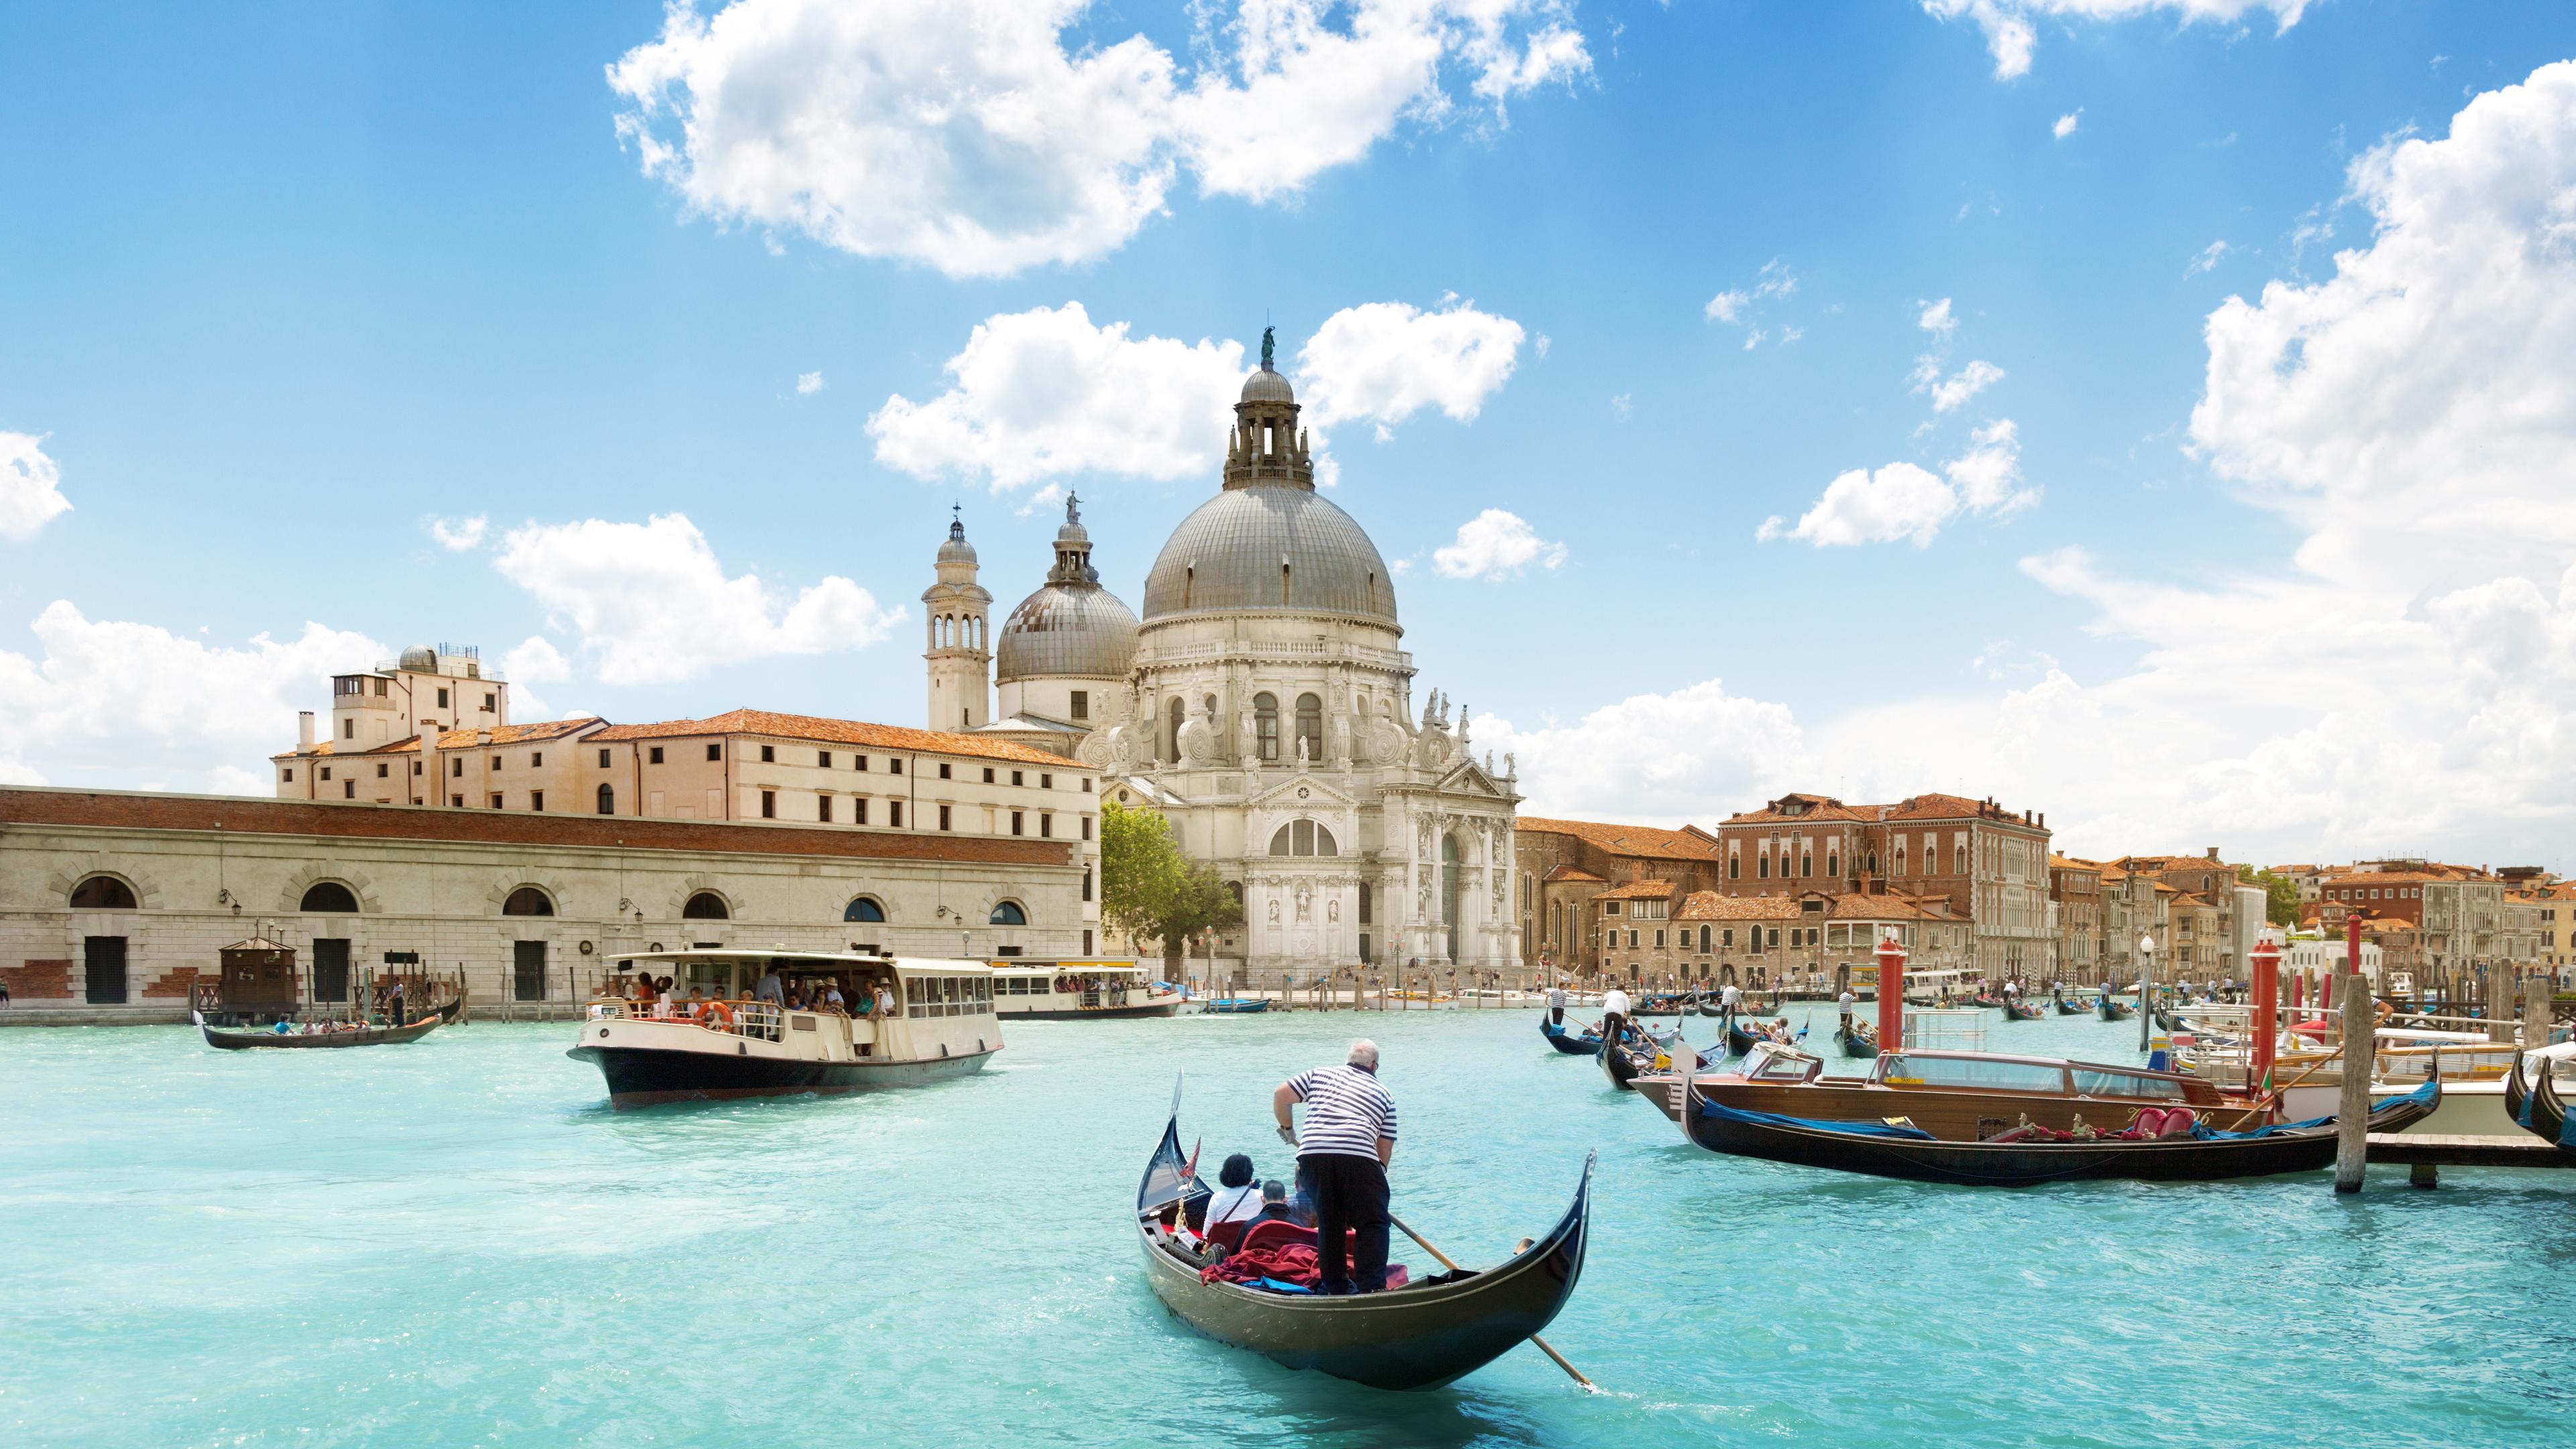 Grand Canal Venice 4K Ultra HD wallpaper